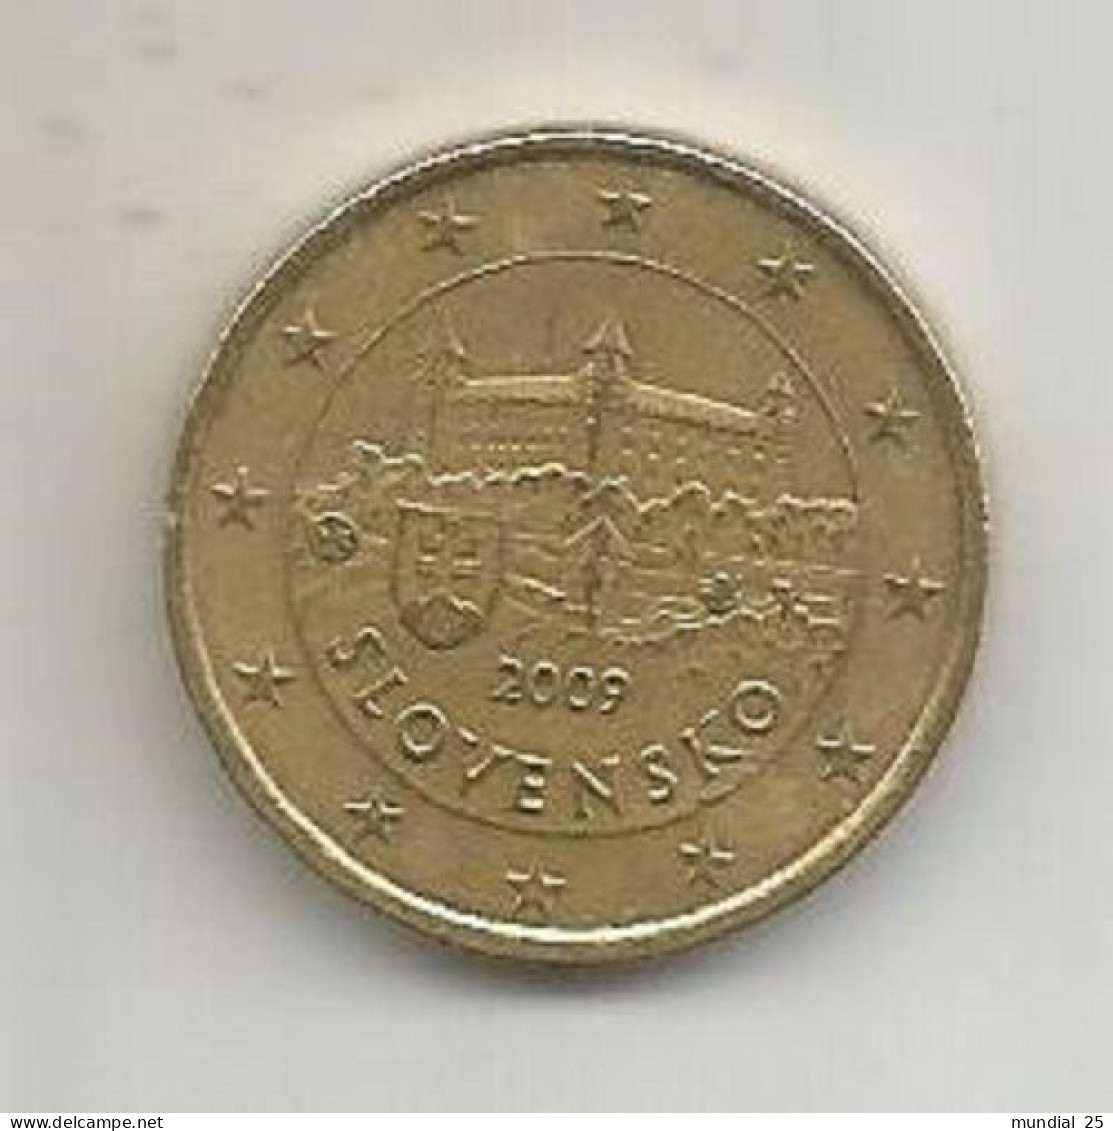 SLOVAKIA 50 EURO CENT 2009 - Eslovaquia